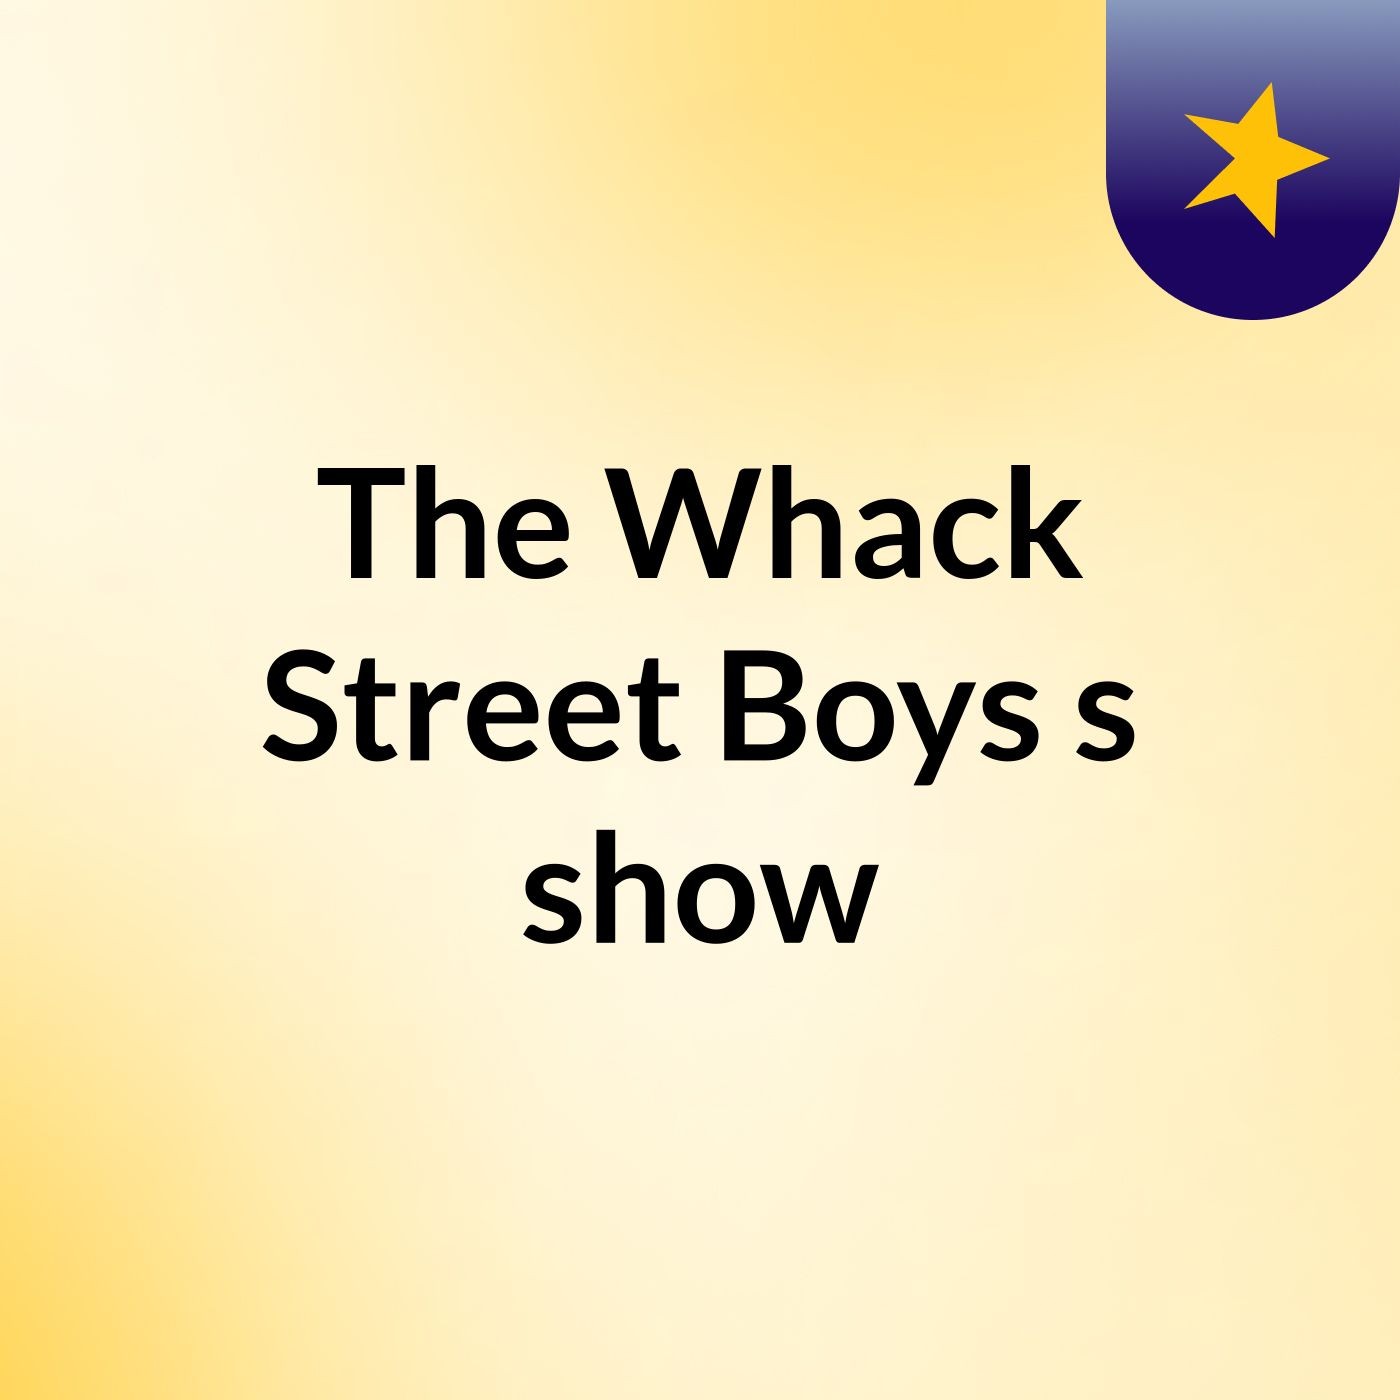 The Whack Street Boys's show